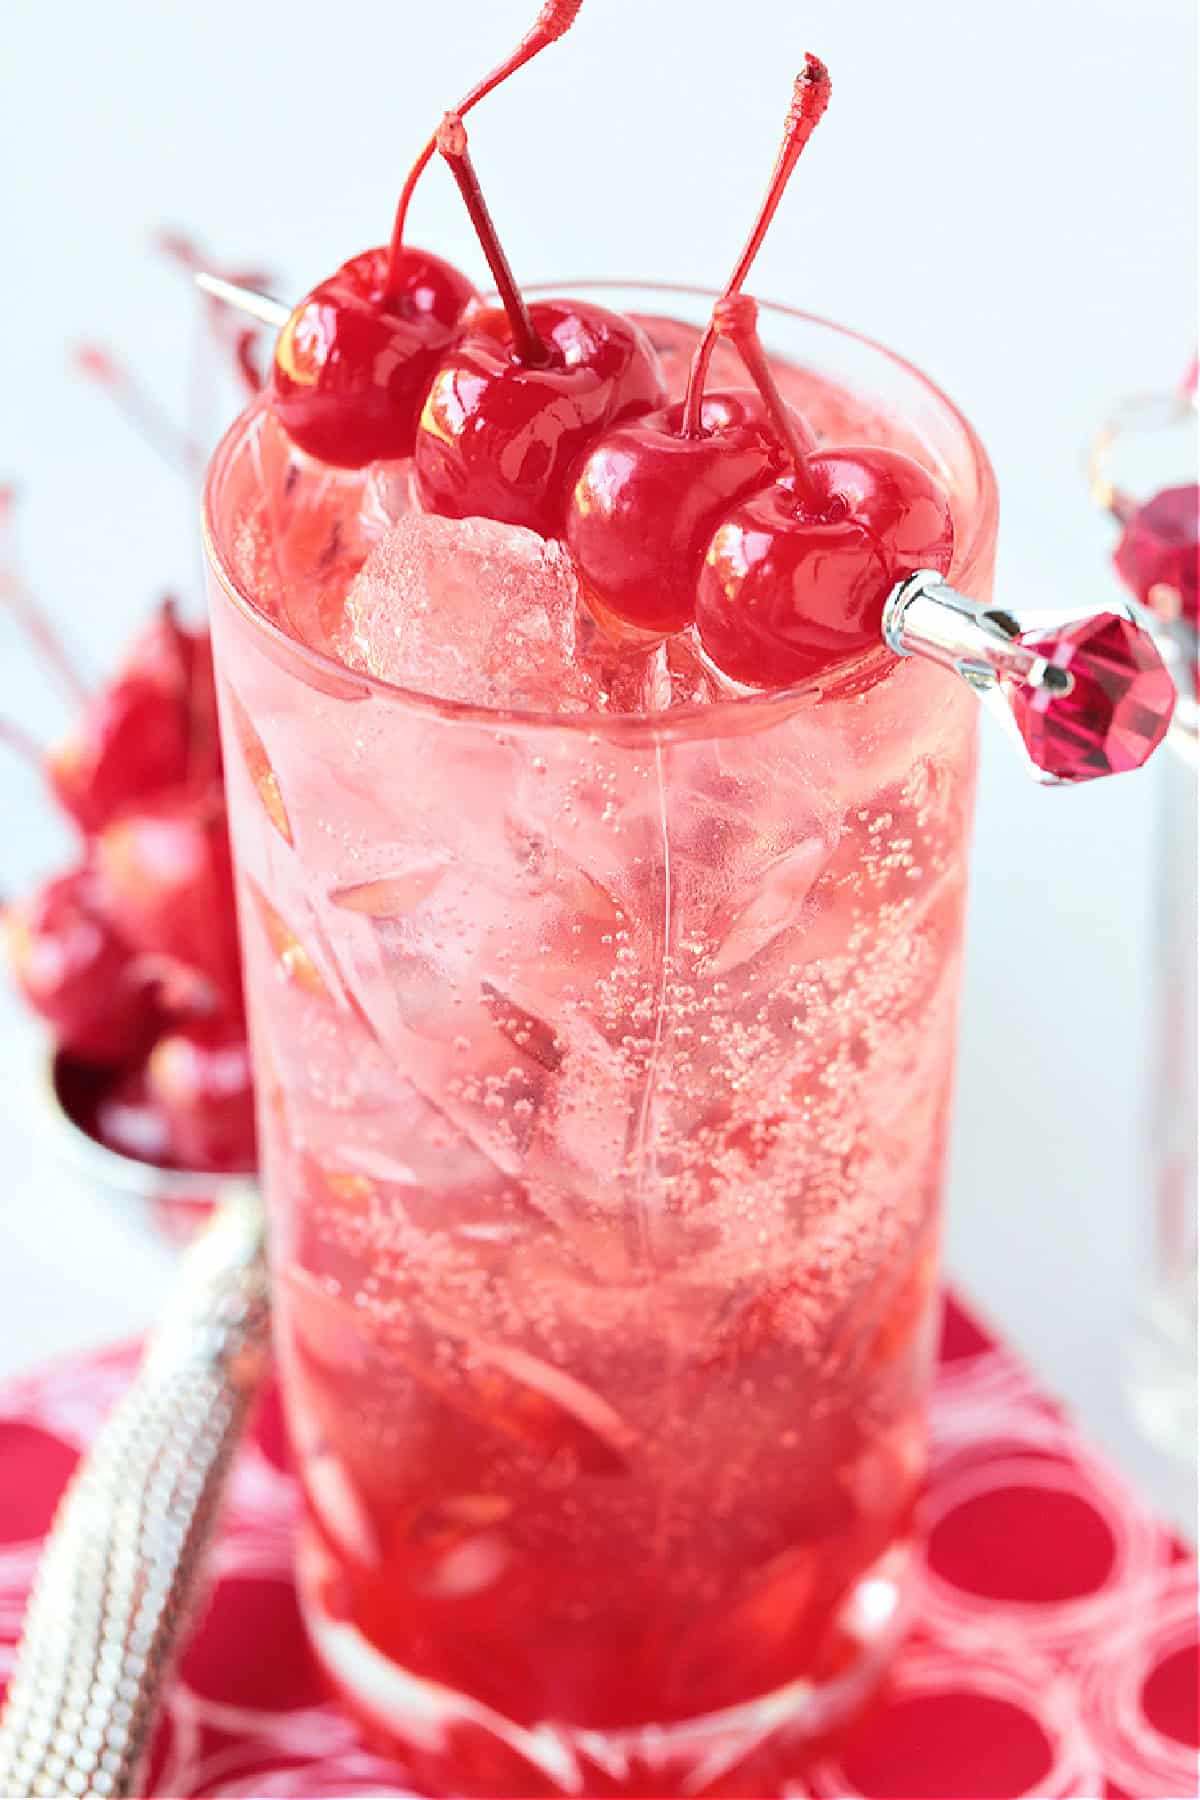 pink vodka cocktail with cherries for garnish